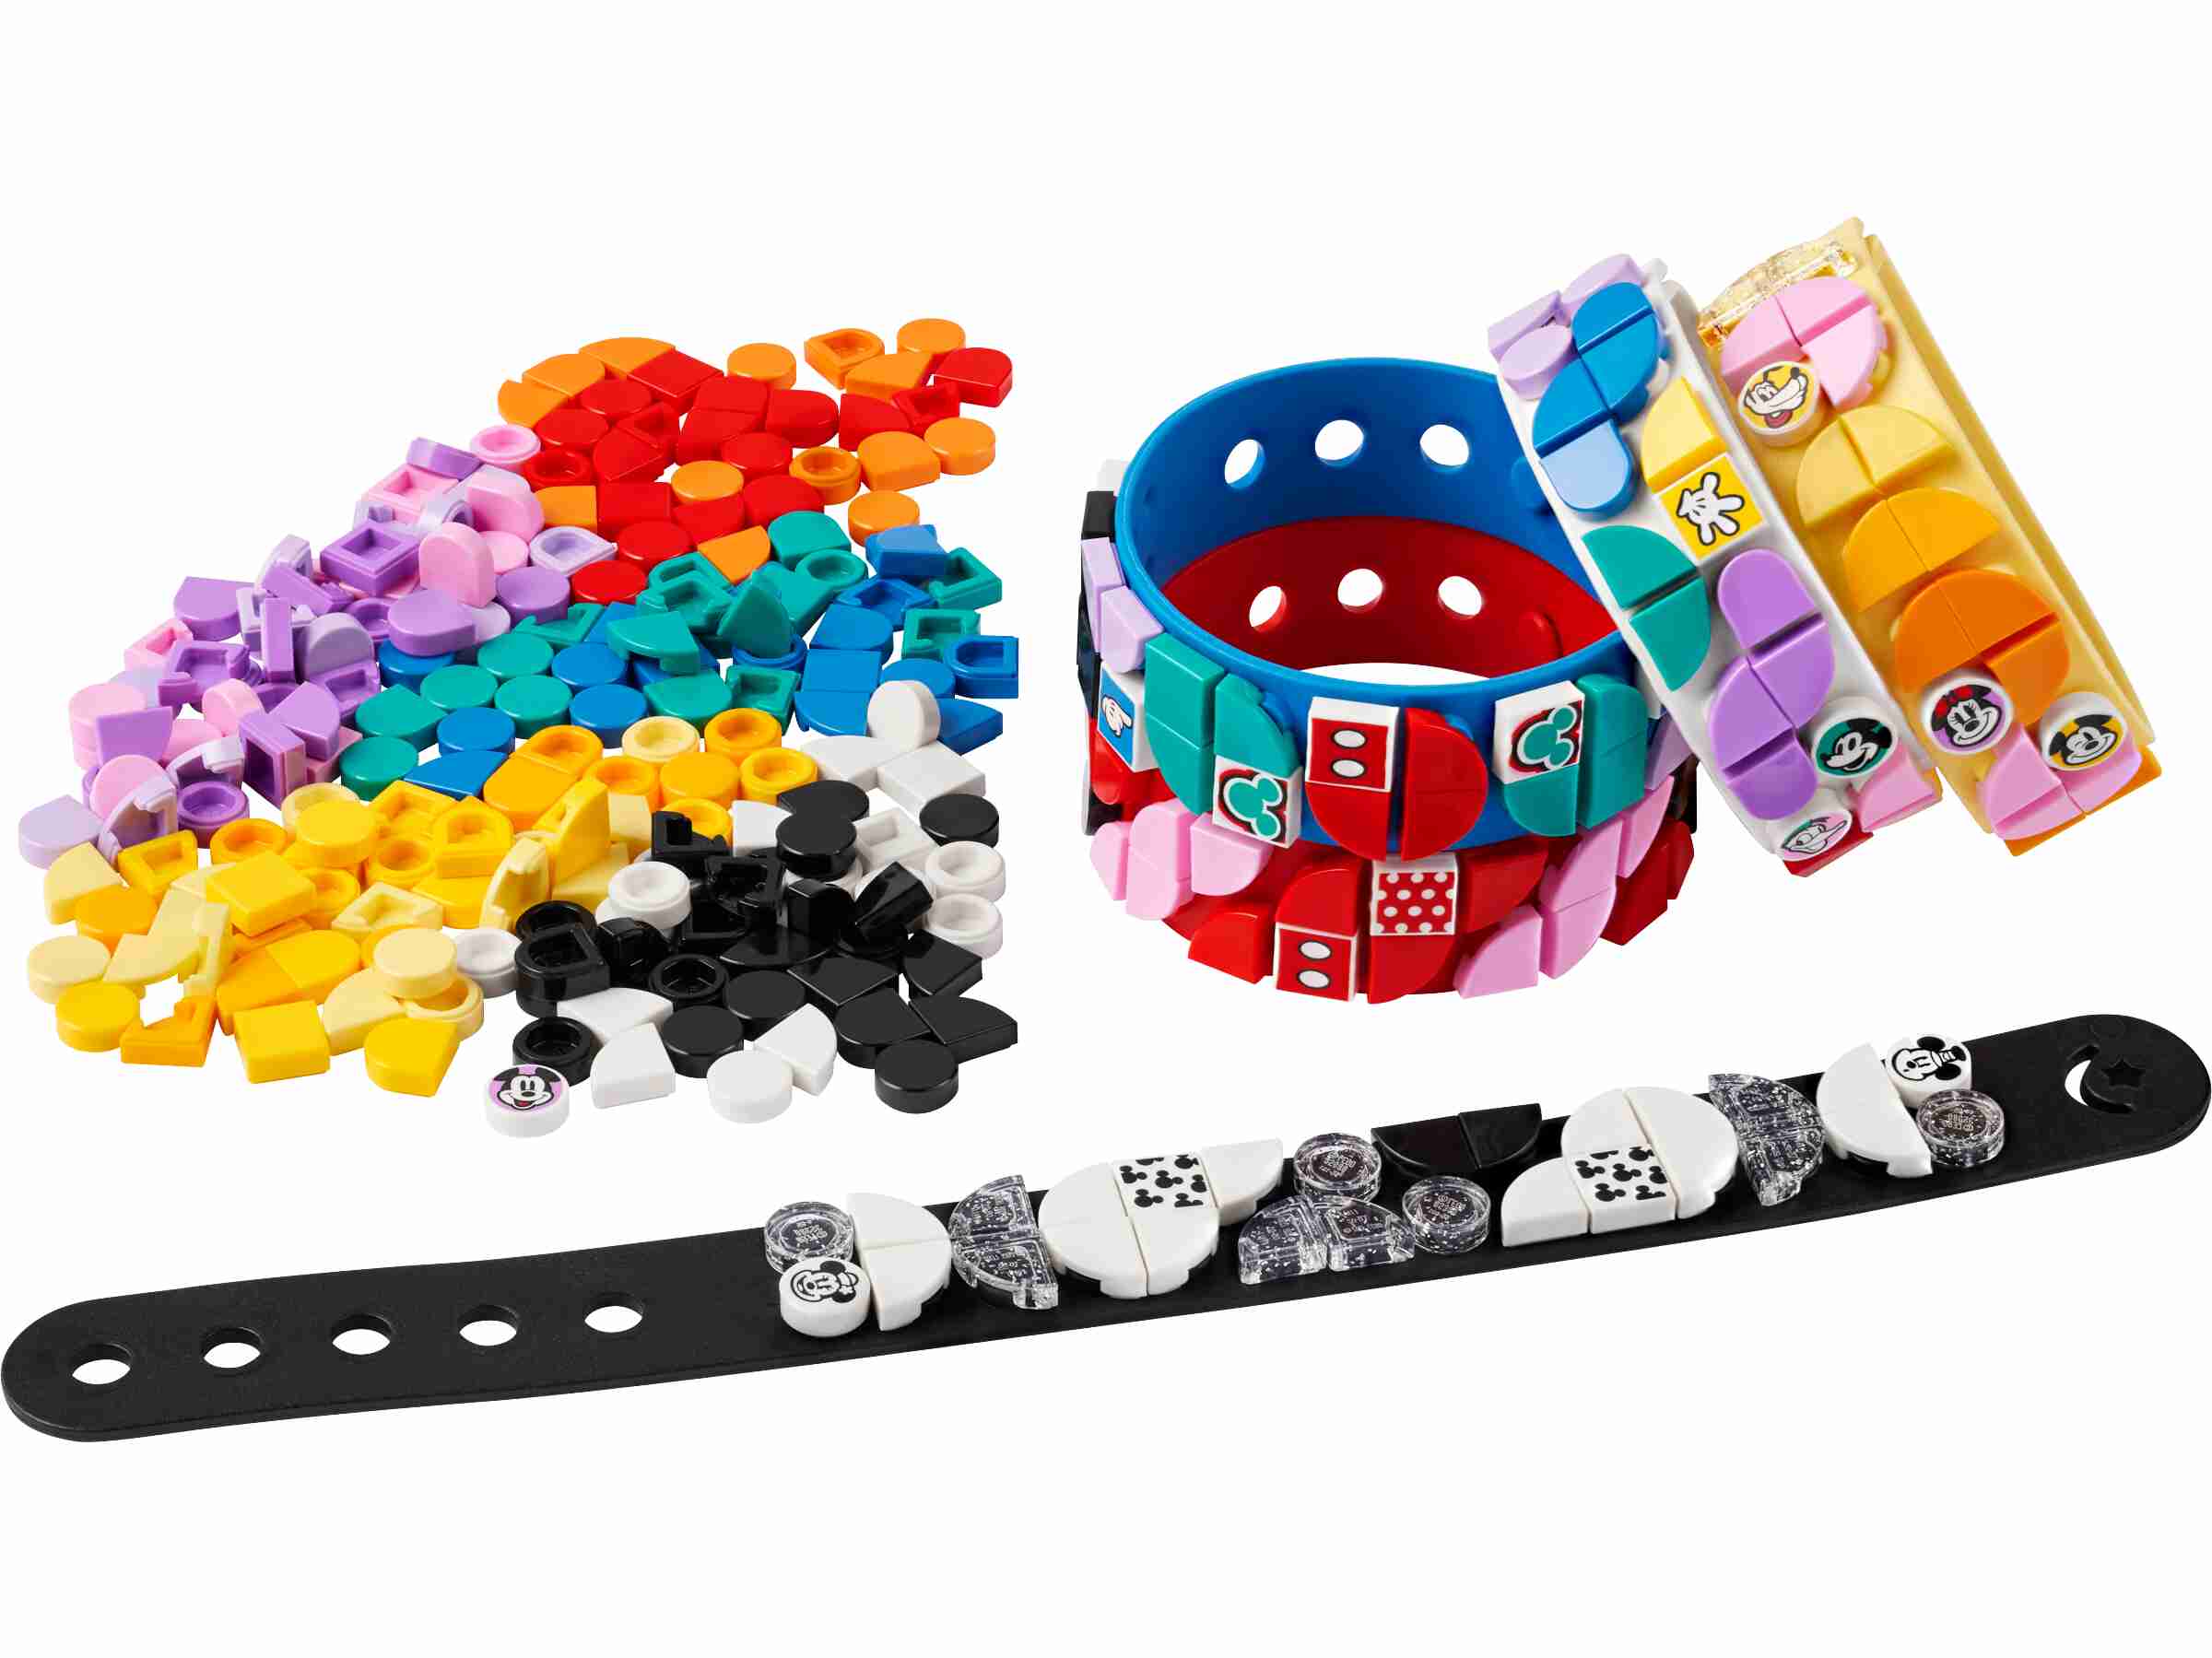 LEGO 41947 DOTS Disney Mickys Armband-Kreativset, 5-in-1 Bastelset